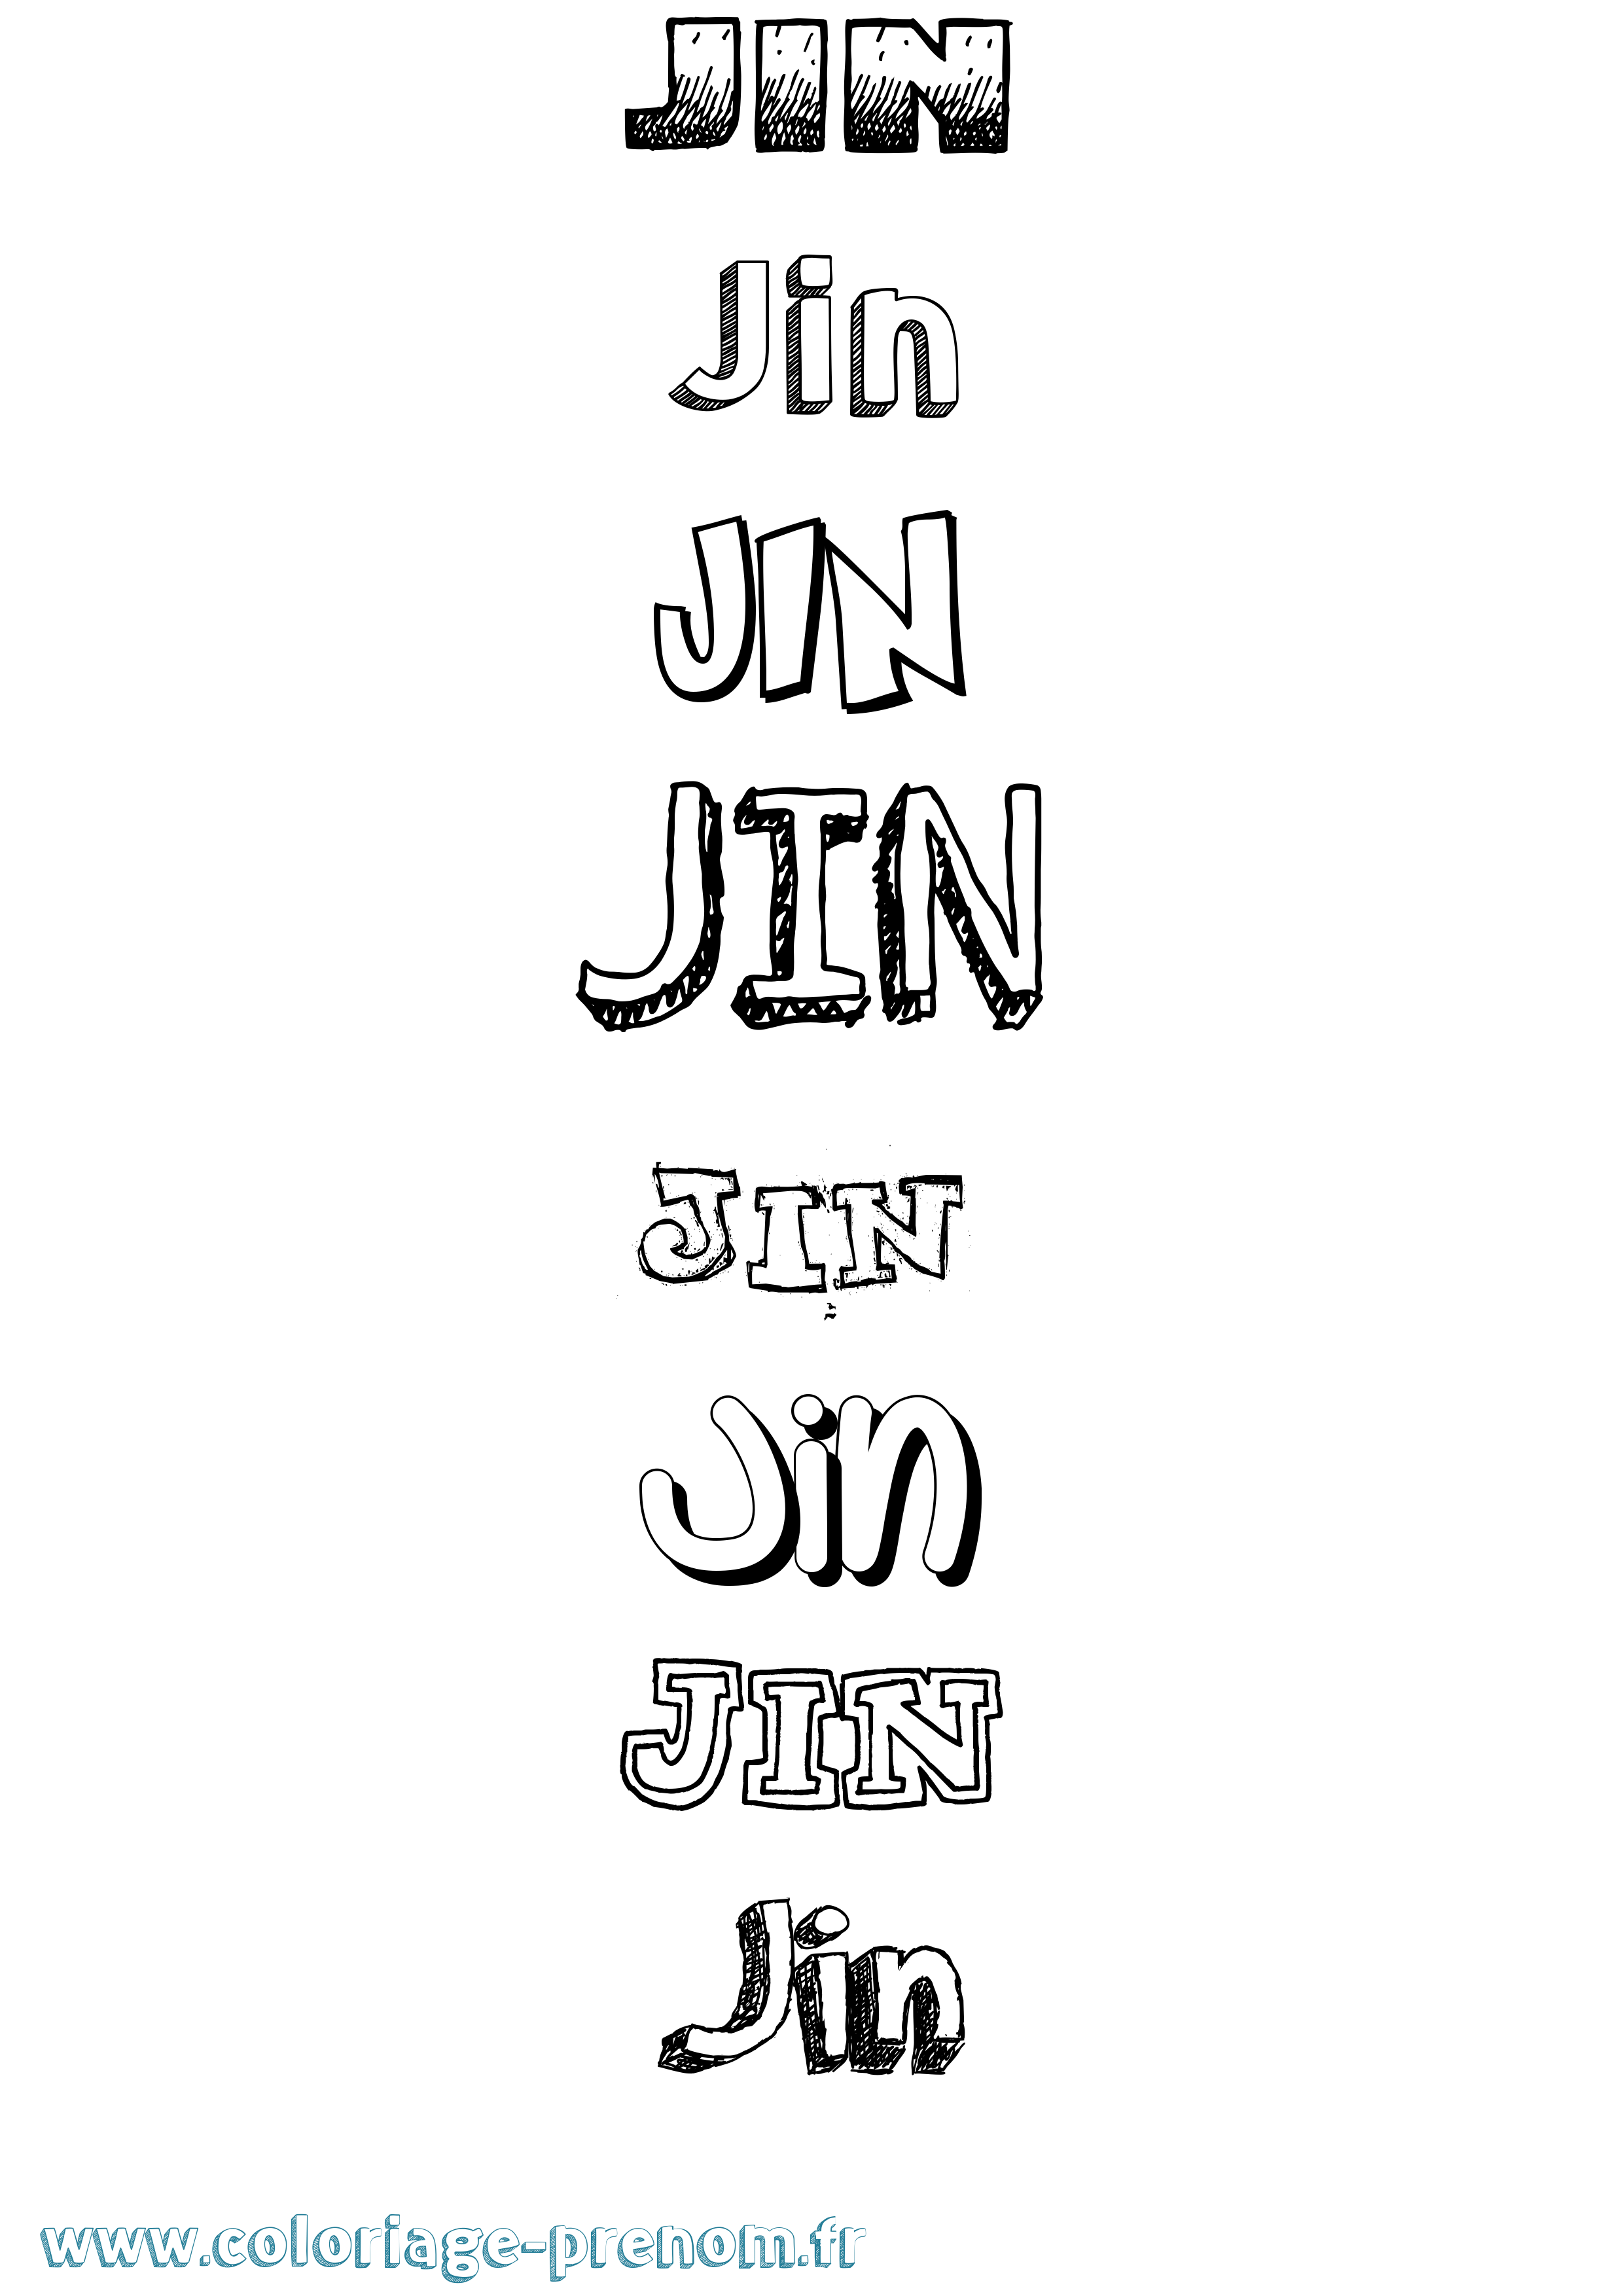 Coloriage prénom Jin Dessiné